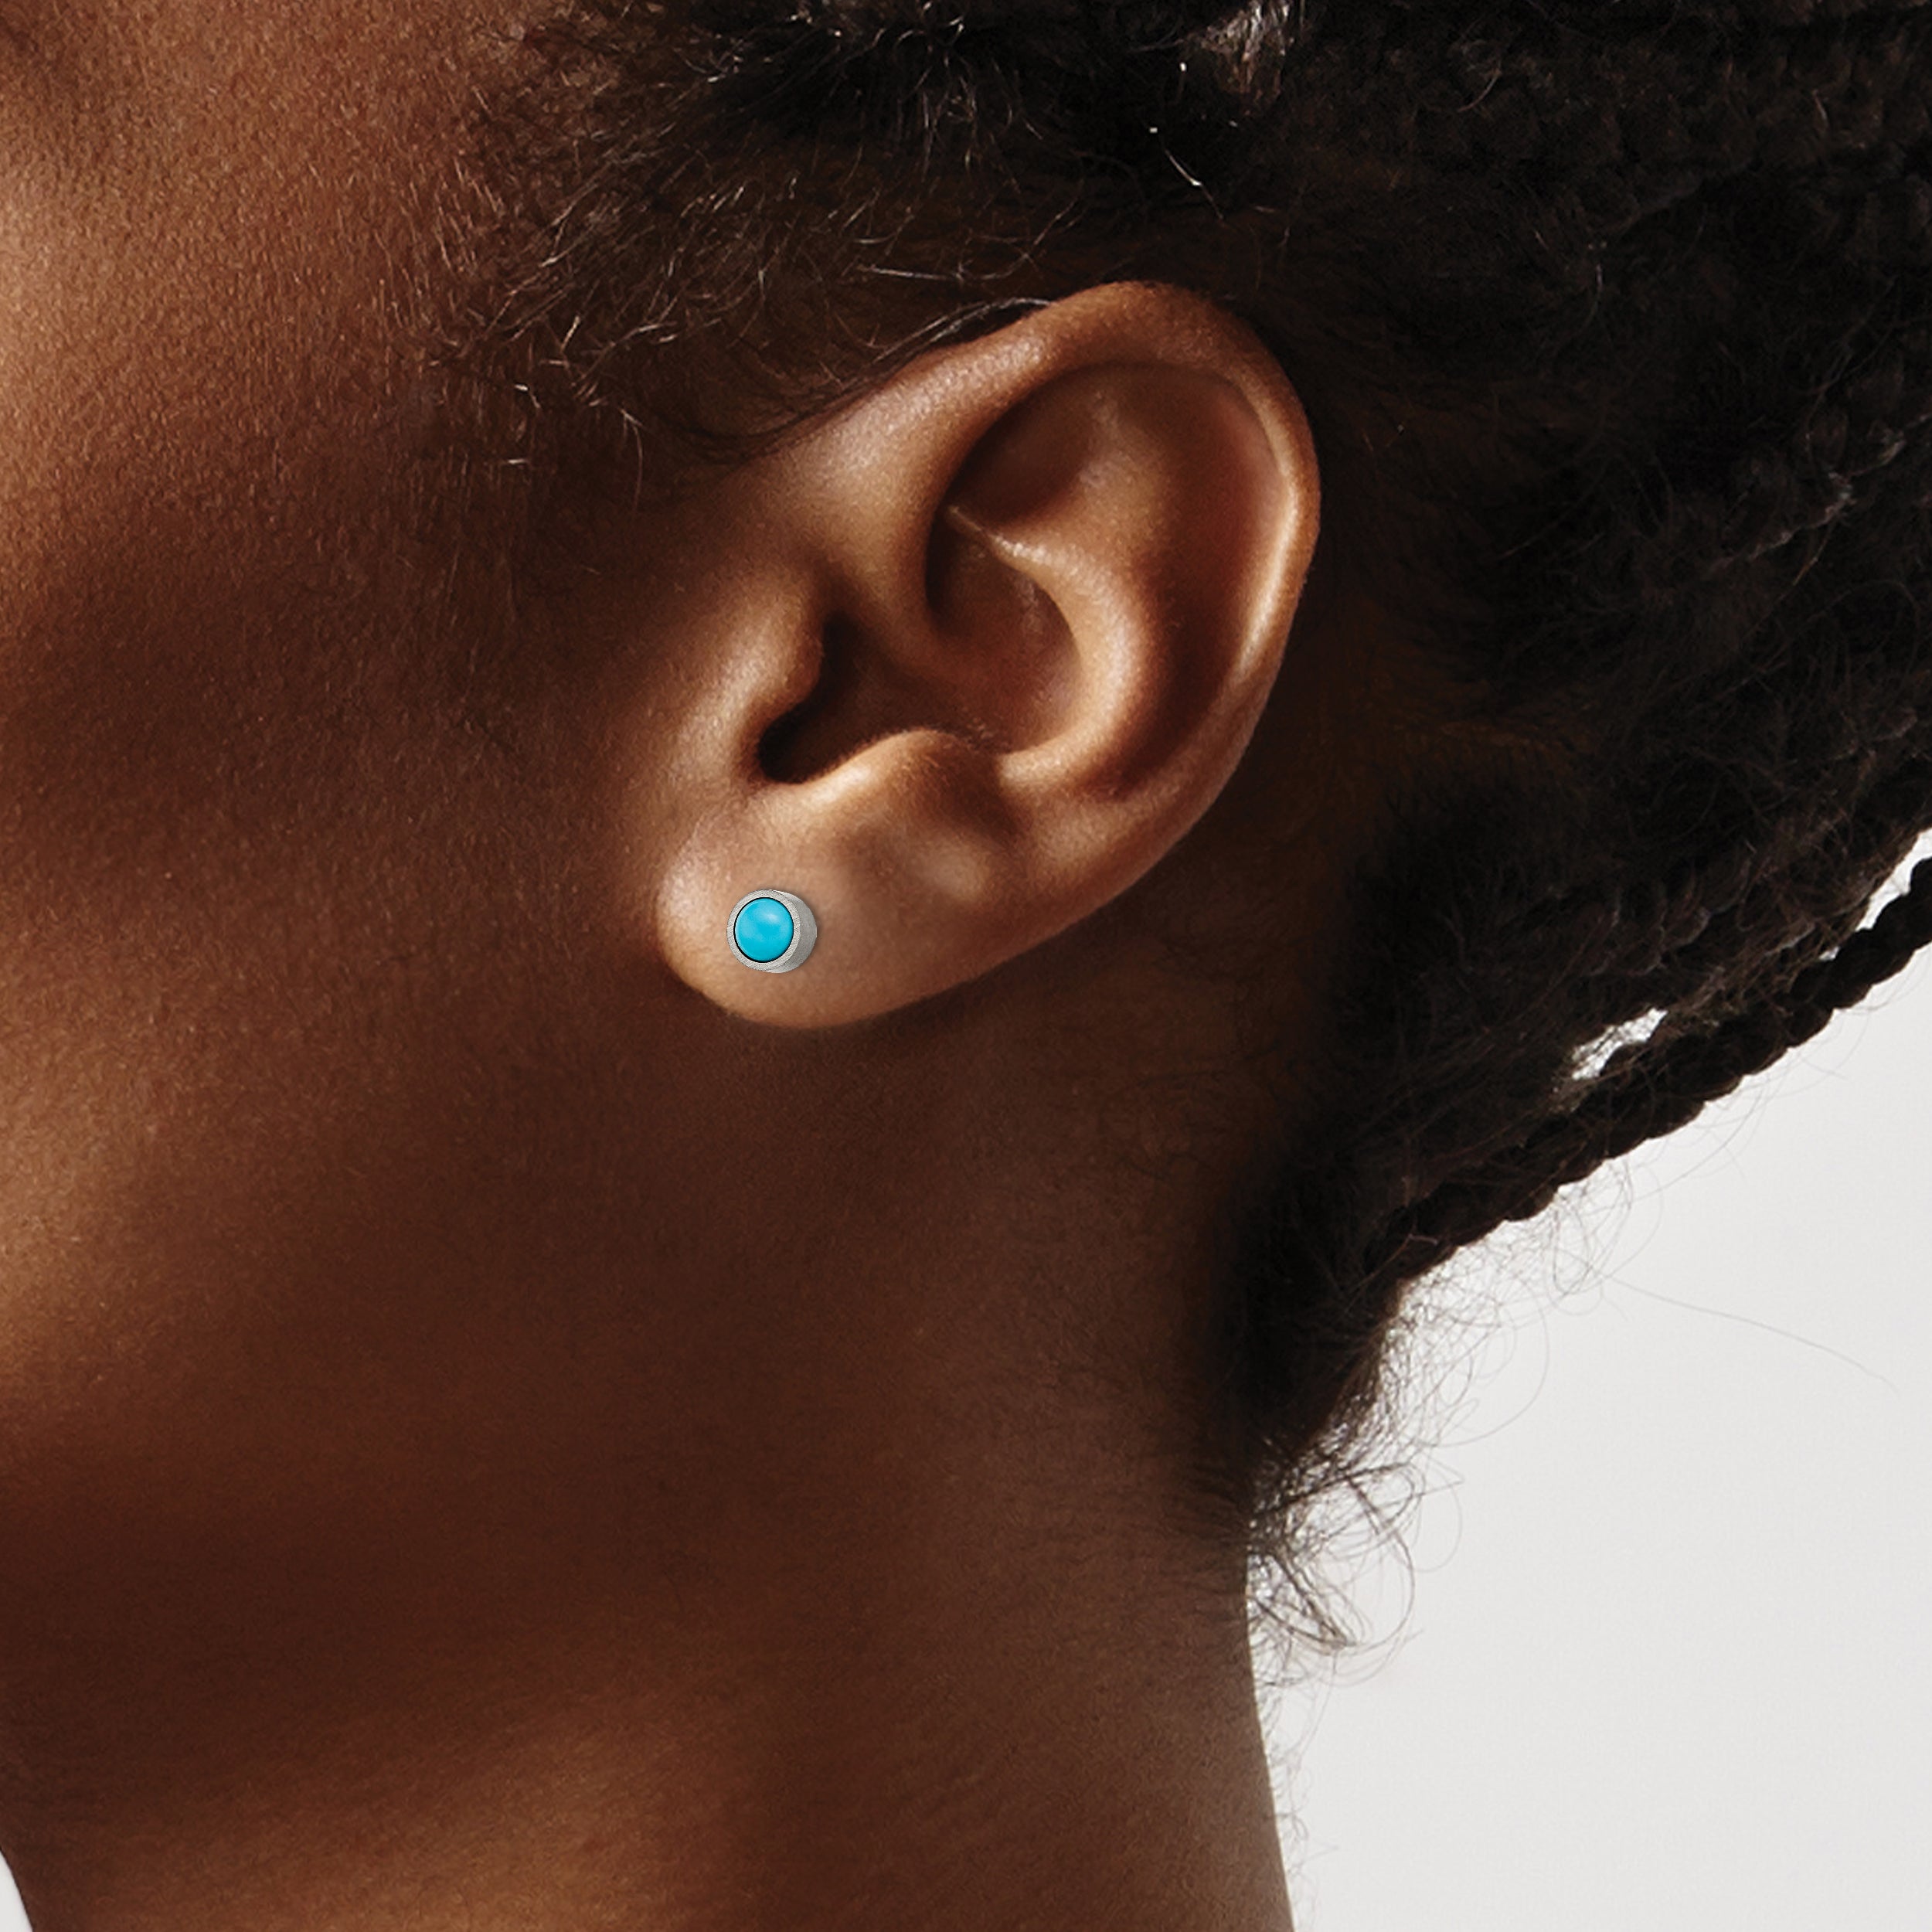 Chisel Titanium Brushed Turquoise 5mm Stud Earrings